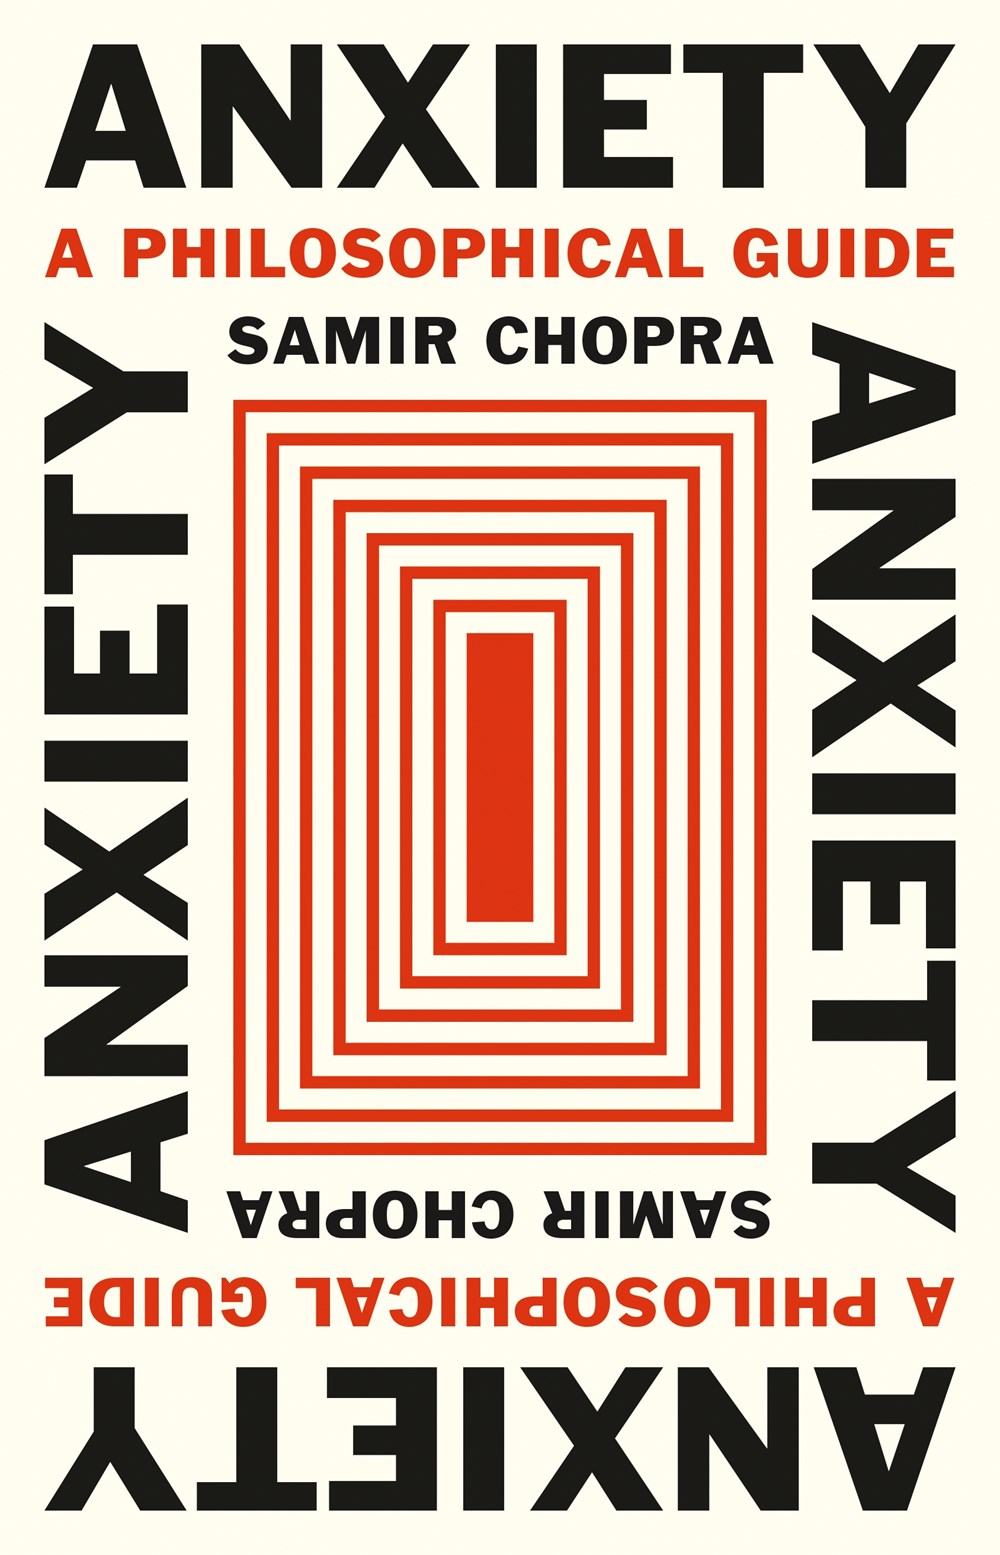 Anxiety-book-cover-design-karl-spurzem